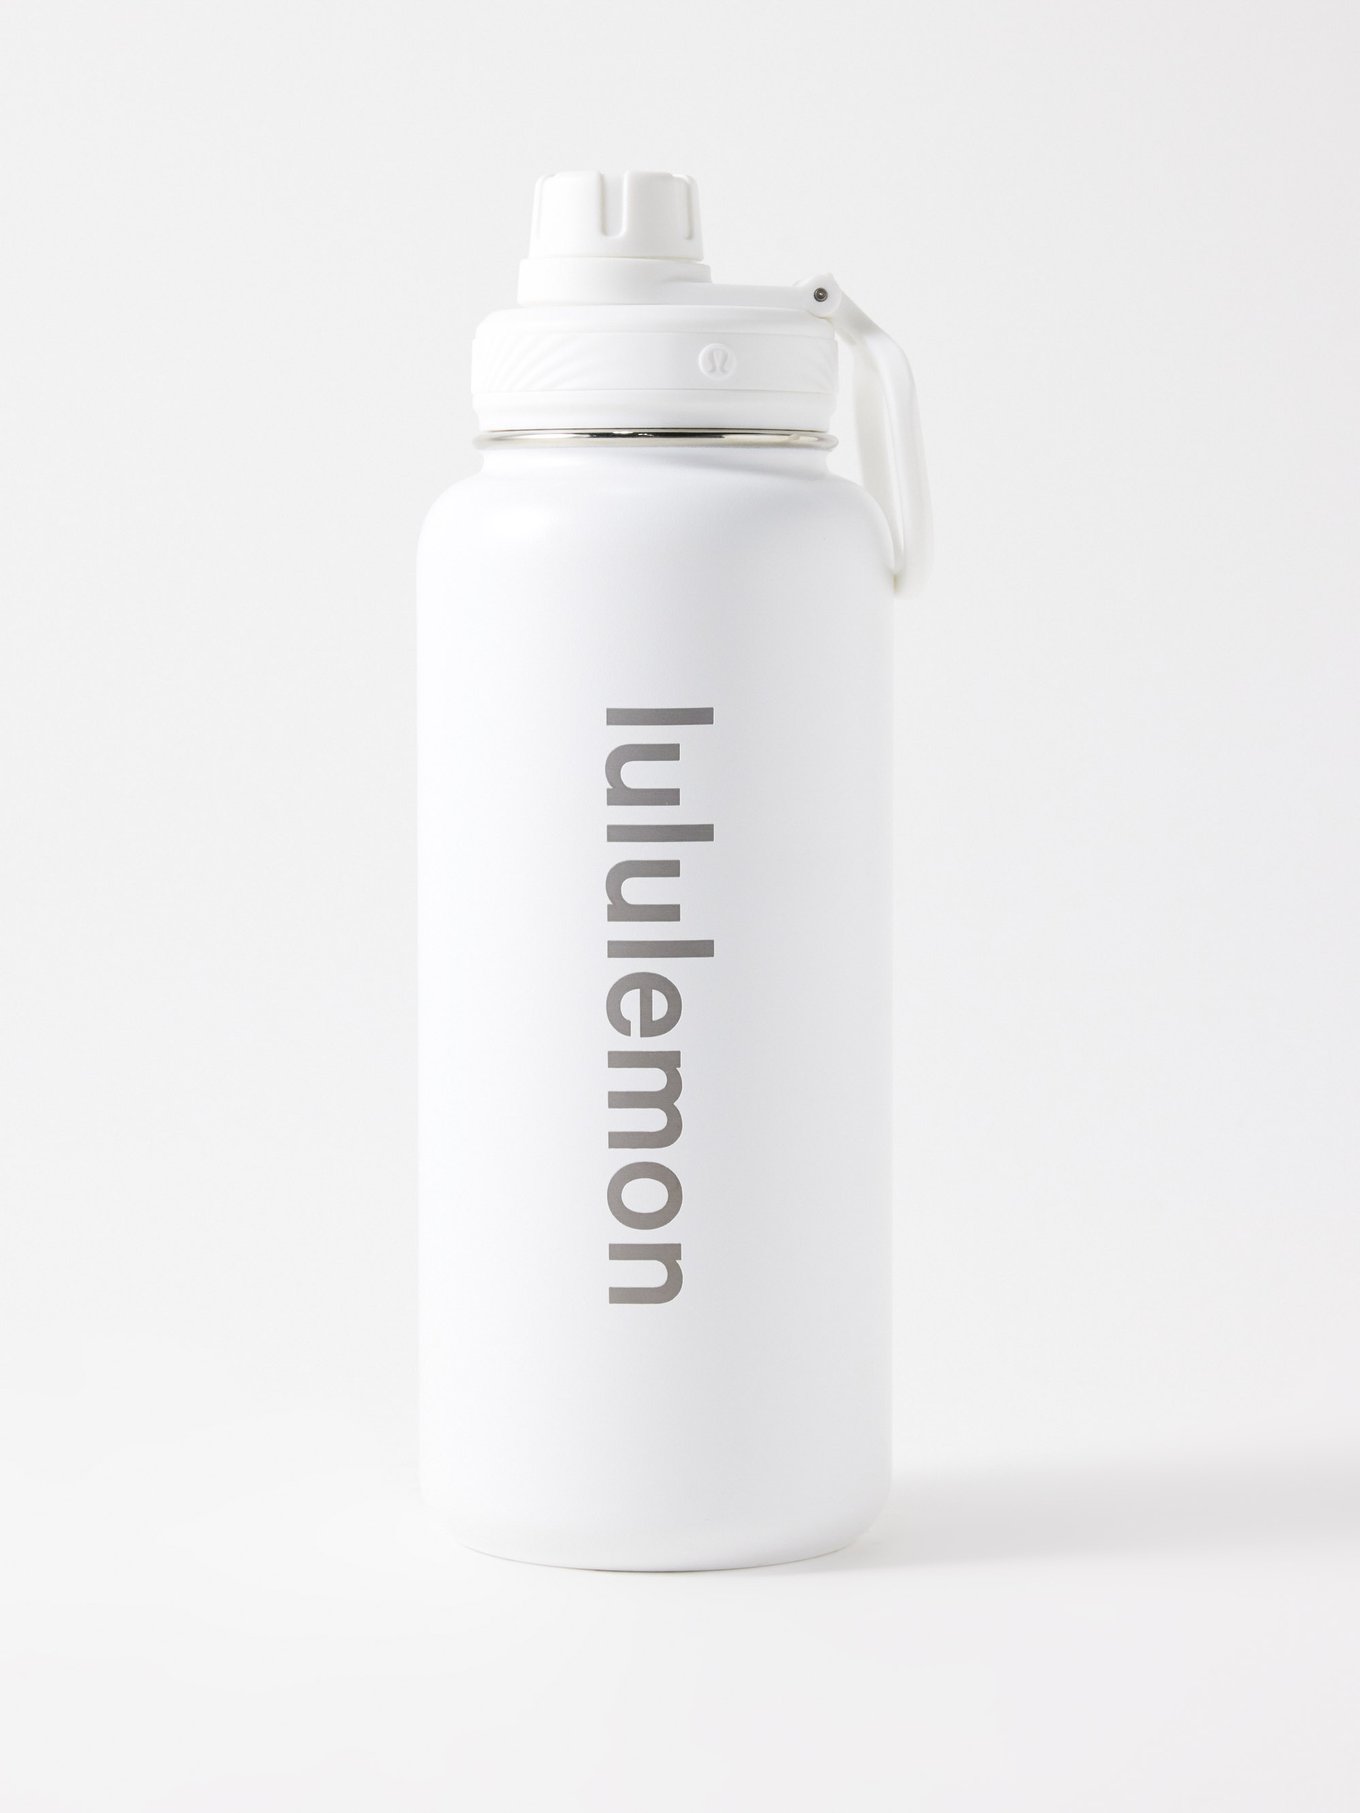 Lululemon Just Released a New Water Bottle Crossbody Bag